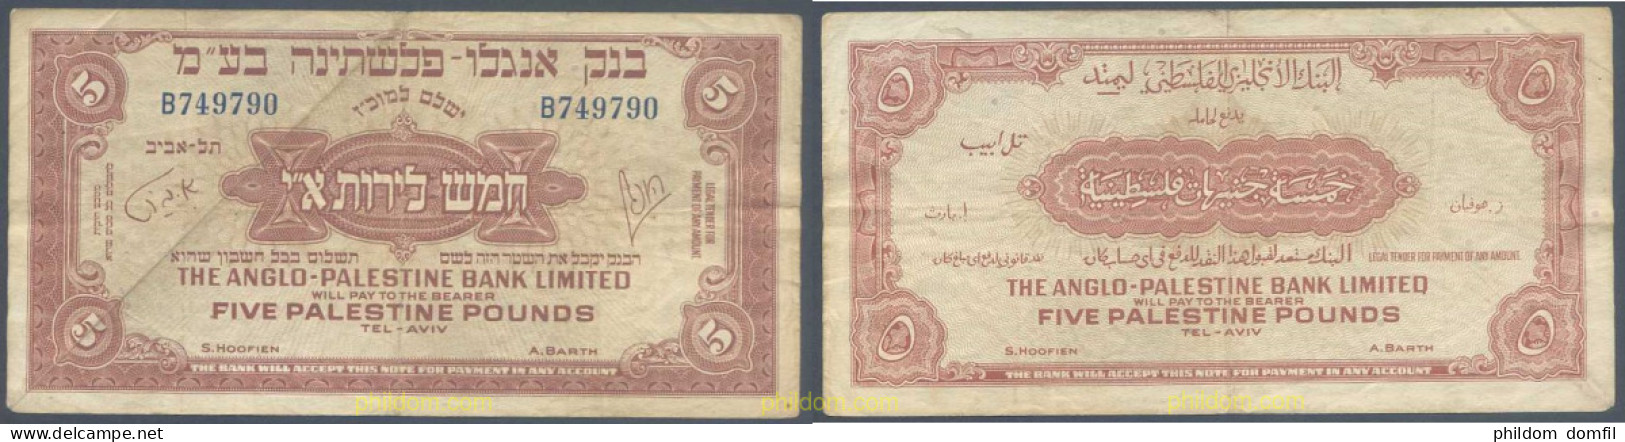 5369 ISRAEL 1948 ISRAEL 5 LIROT POUNDS PALESTINE 1948 - Israël